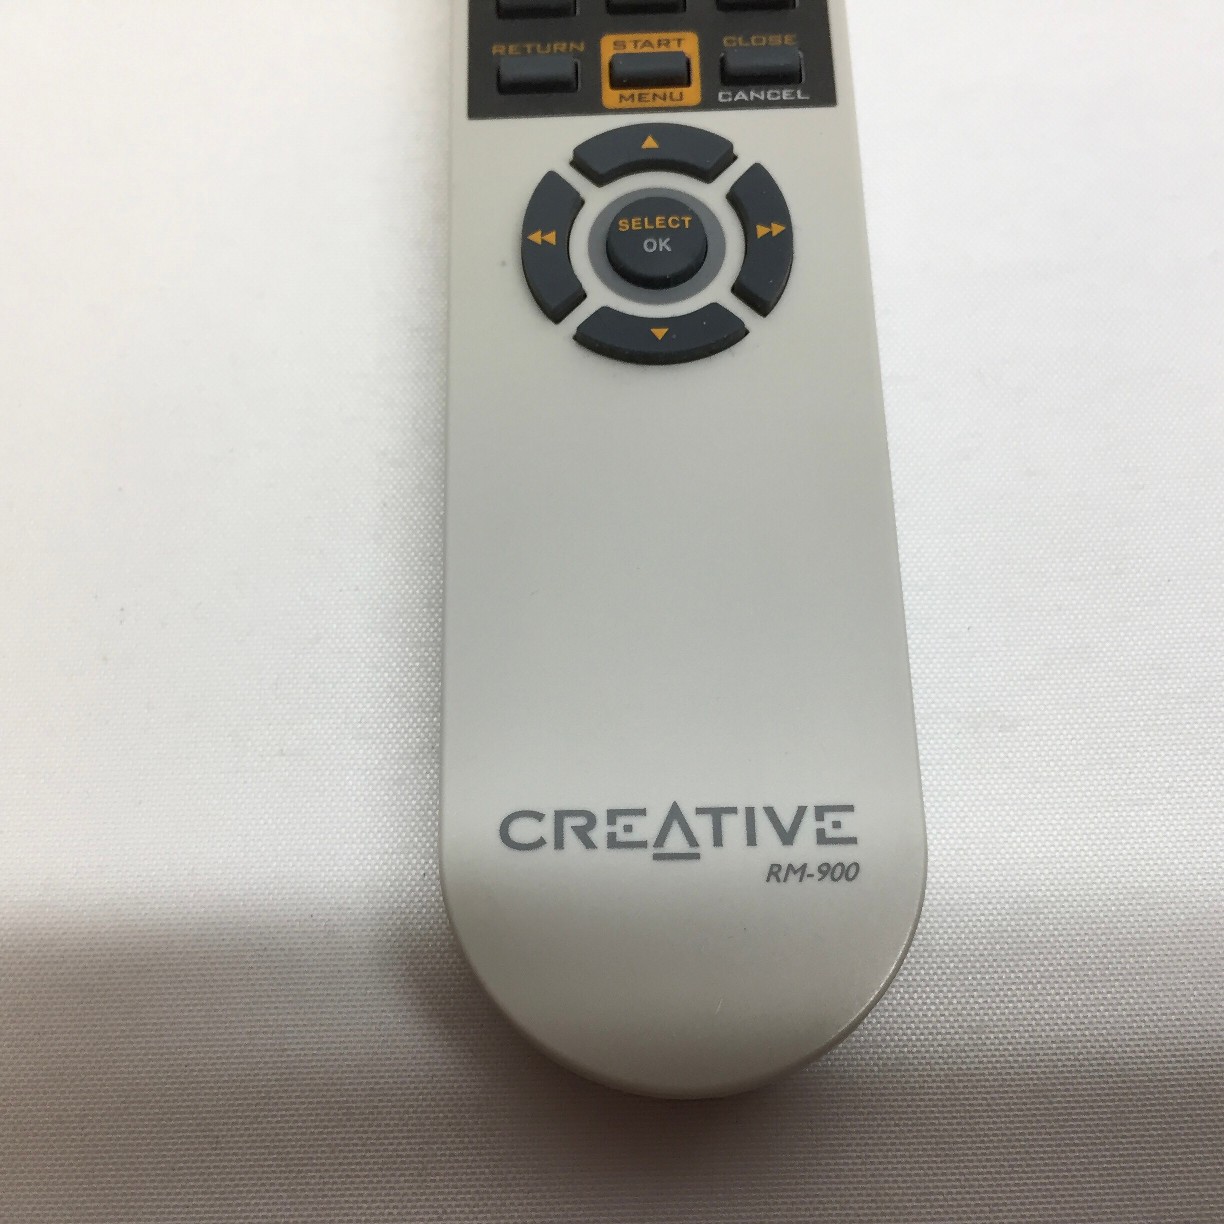 new & warranty Creative RM-900 remote control 